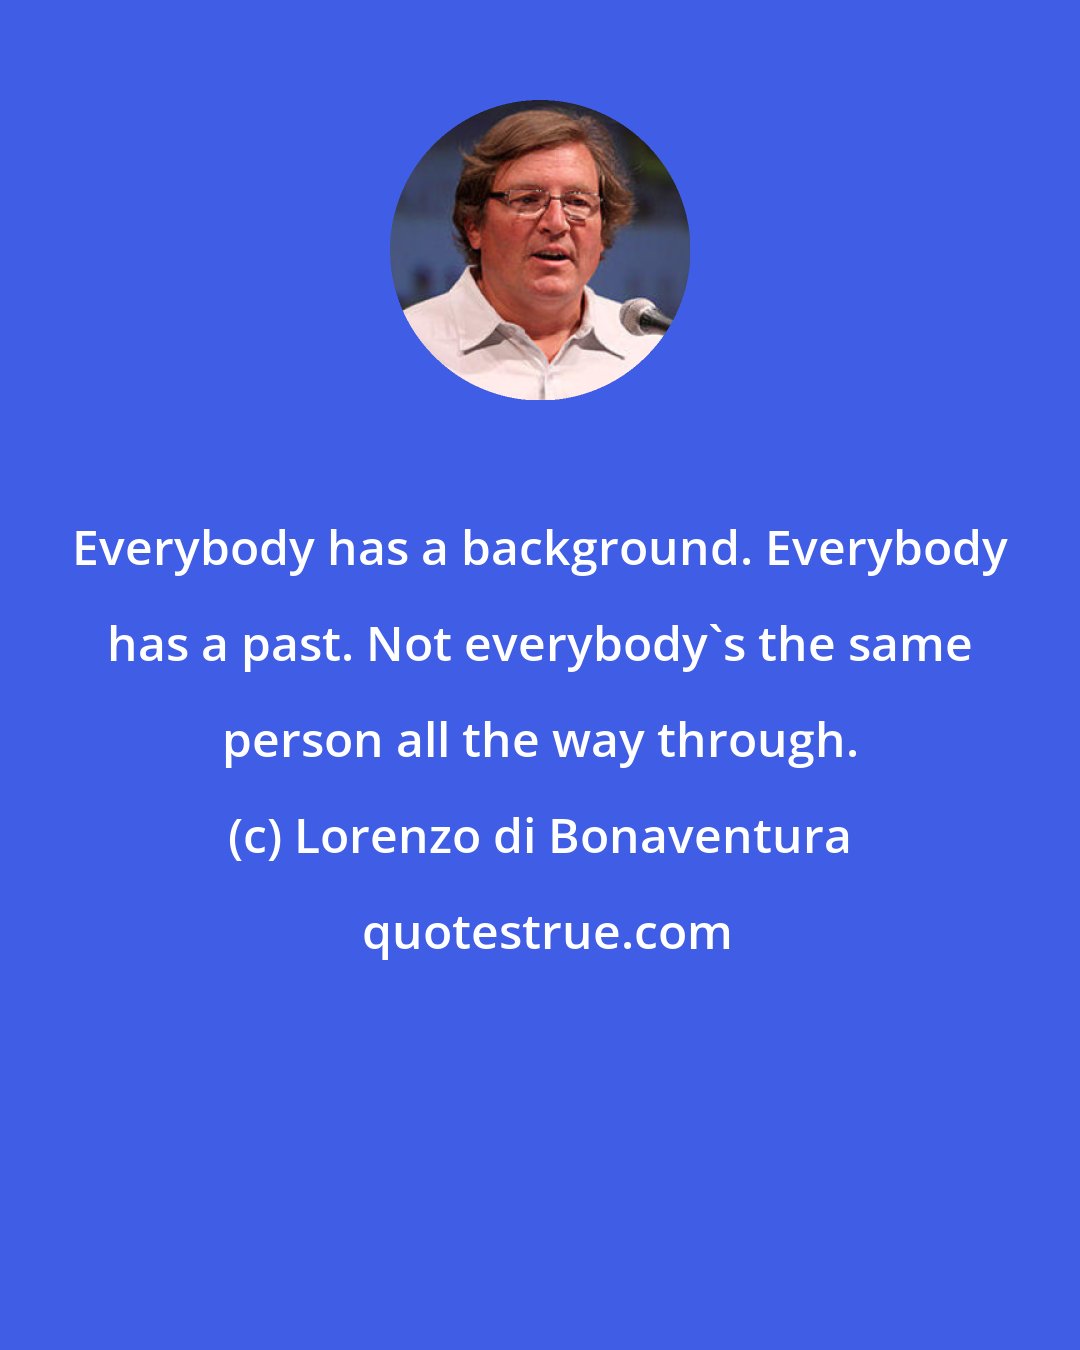 Lorenzo di Bonaventura: Everybody has a background. Everybody has a past. Not everybody's the same person all the way through.